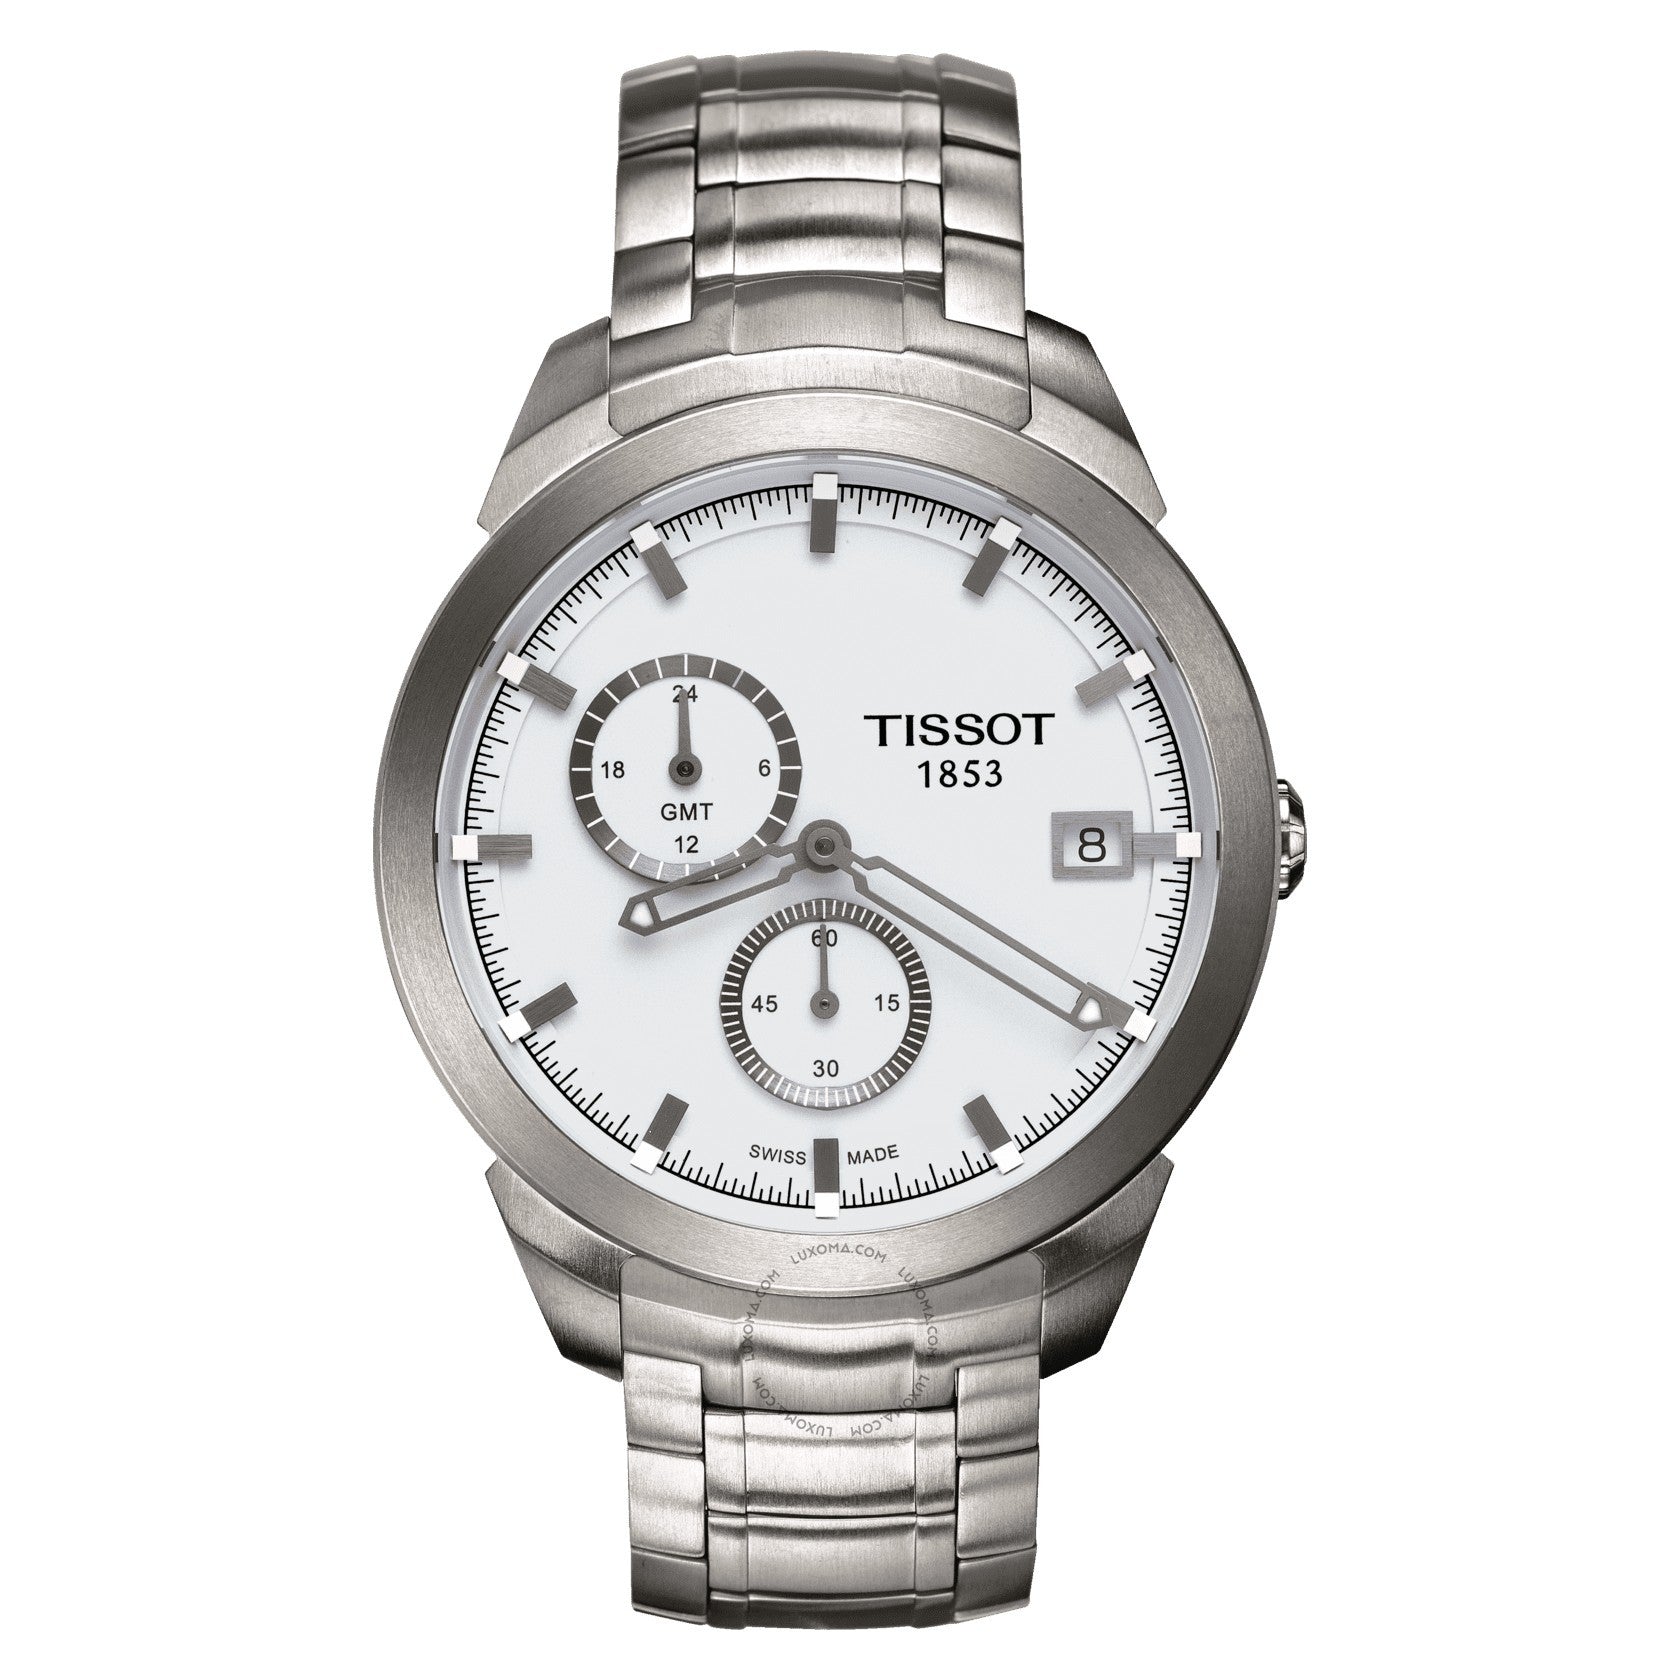 Tissot Titanium GMT Chronograph White Dial Men's Watch T069.439.44.031.00